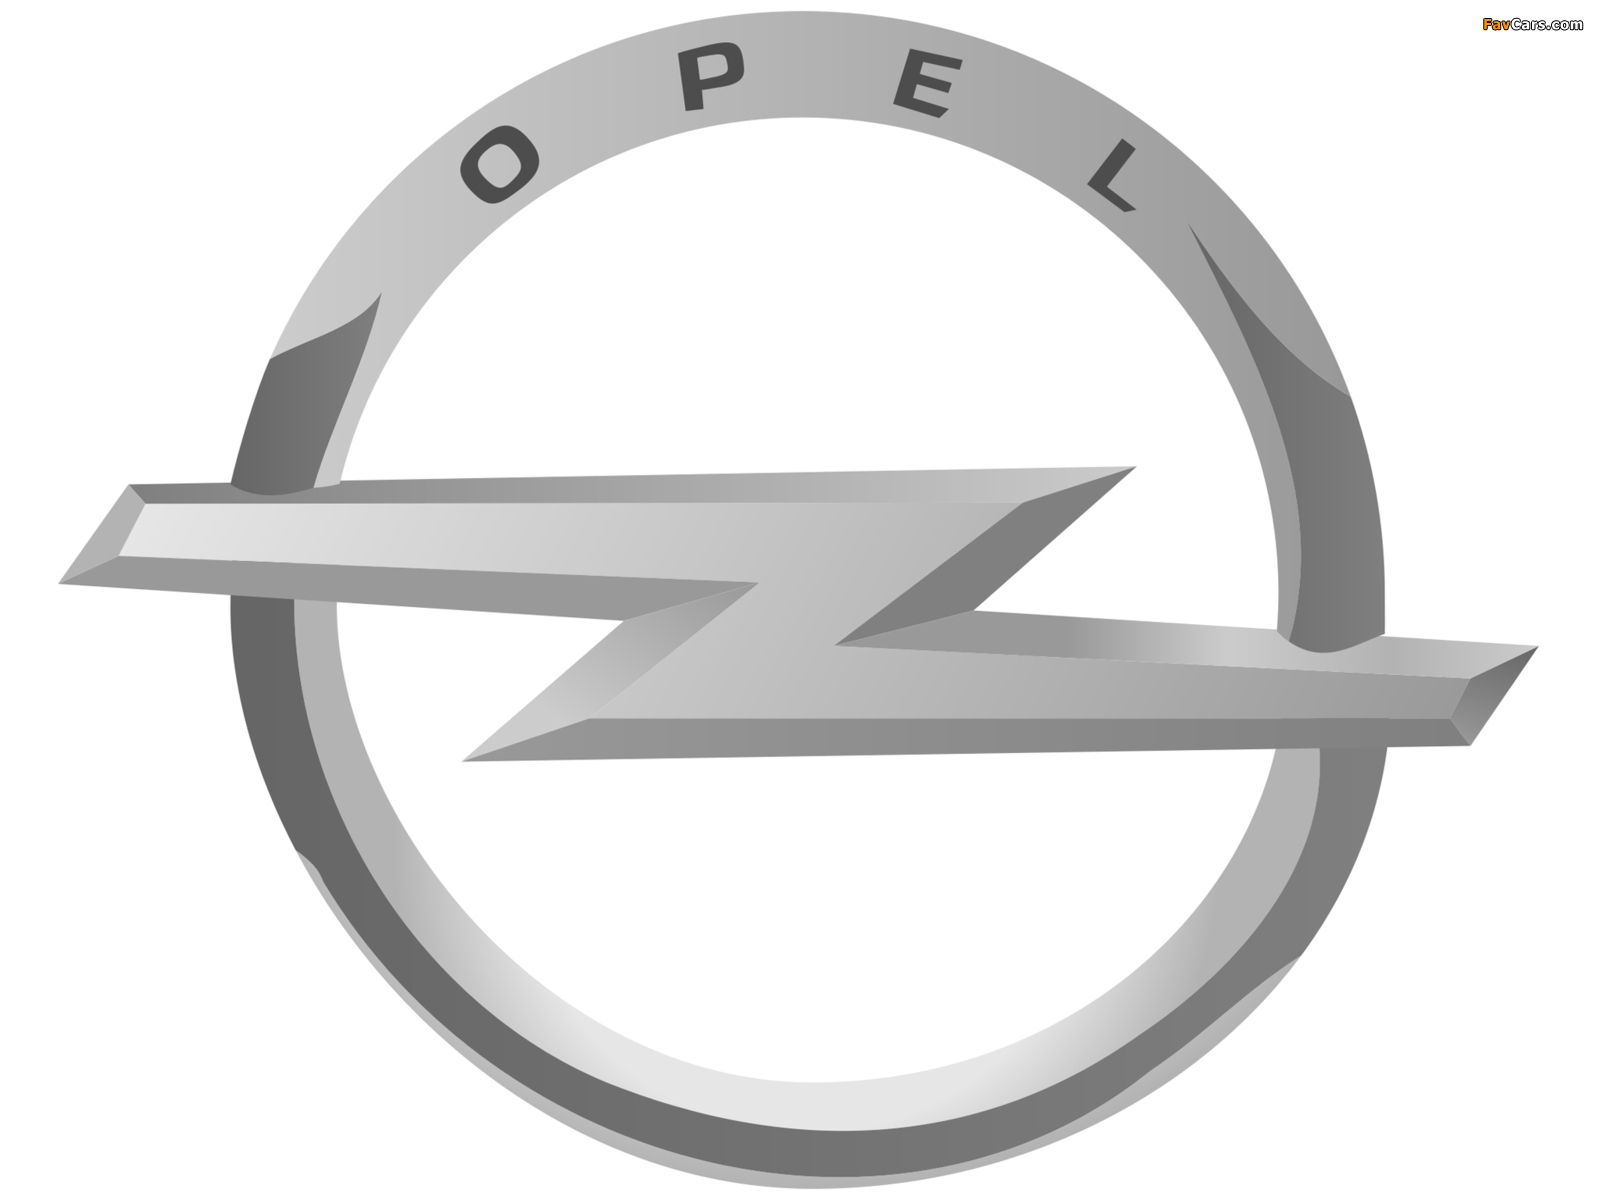 Opel wallpapers (1600 x 1200)